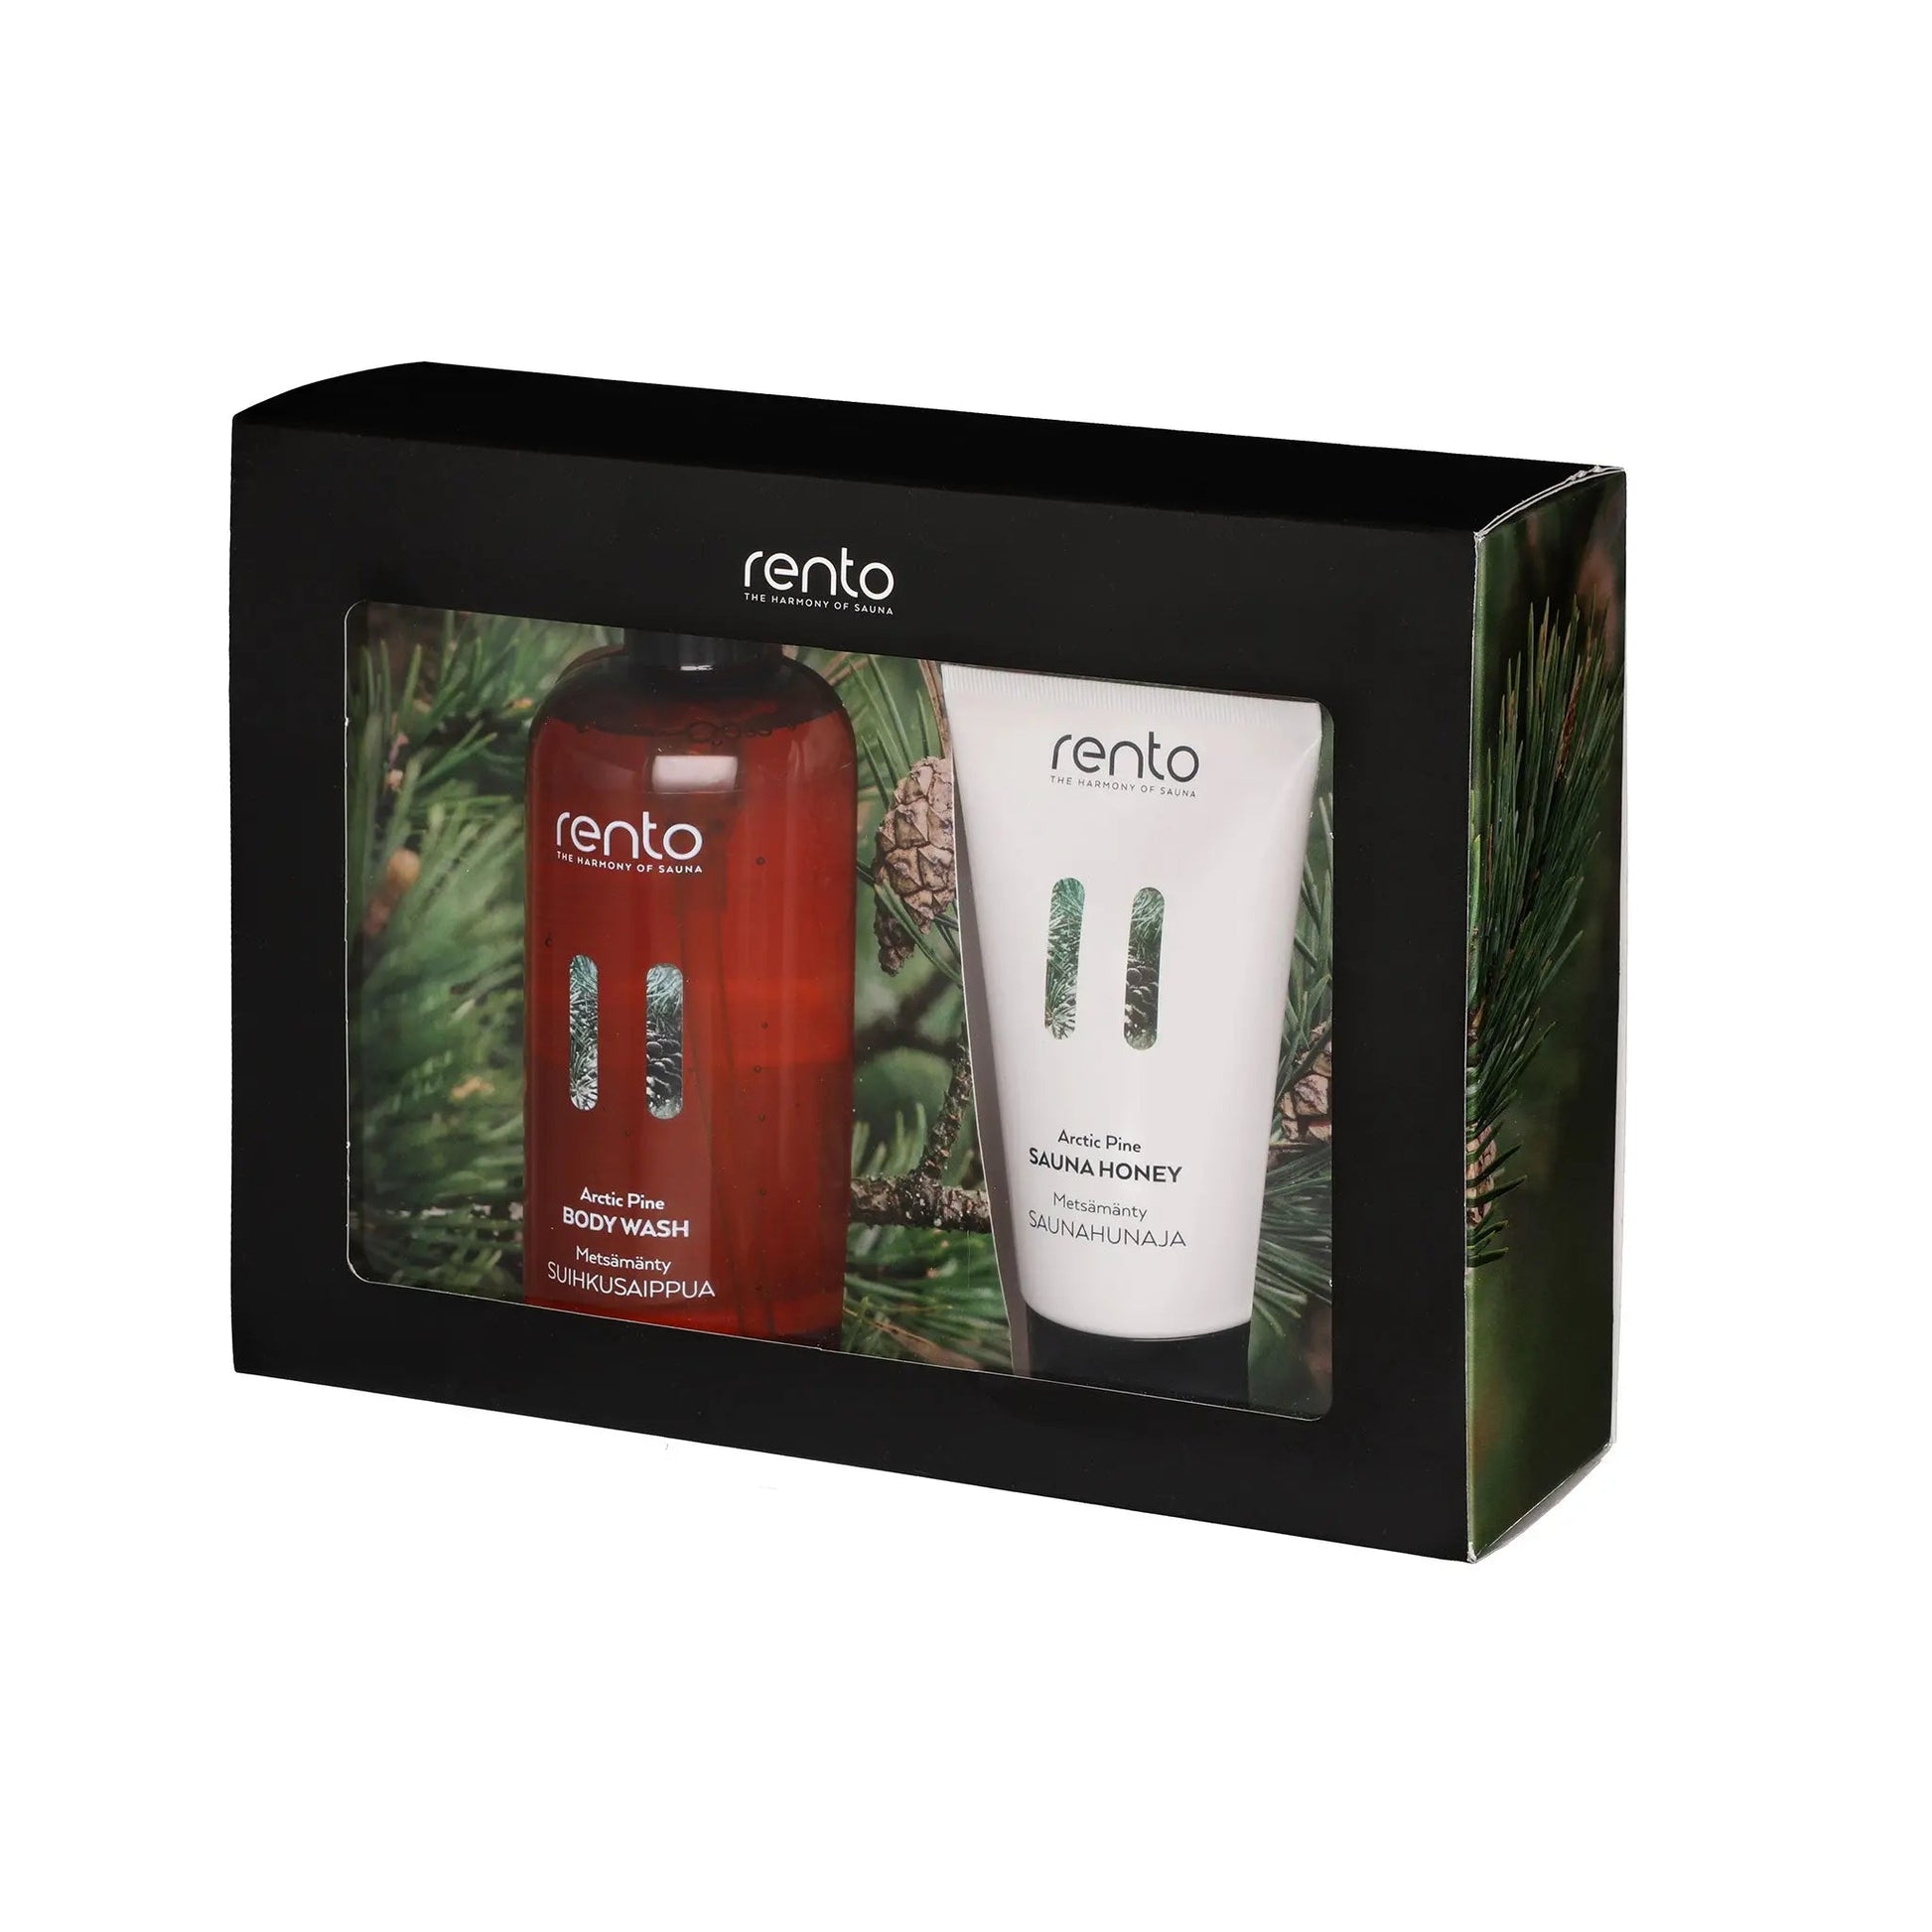 Arctic Pine Body Wash & Sauna Honey Gift Set Set by Rento Gift Set | Finnmark Sauna